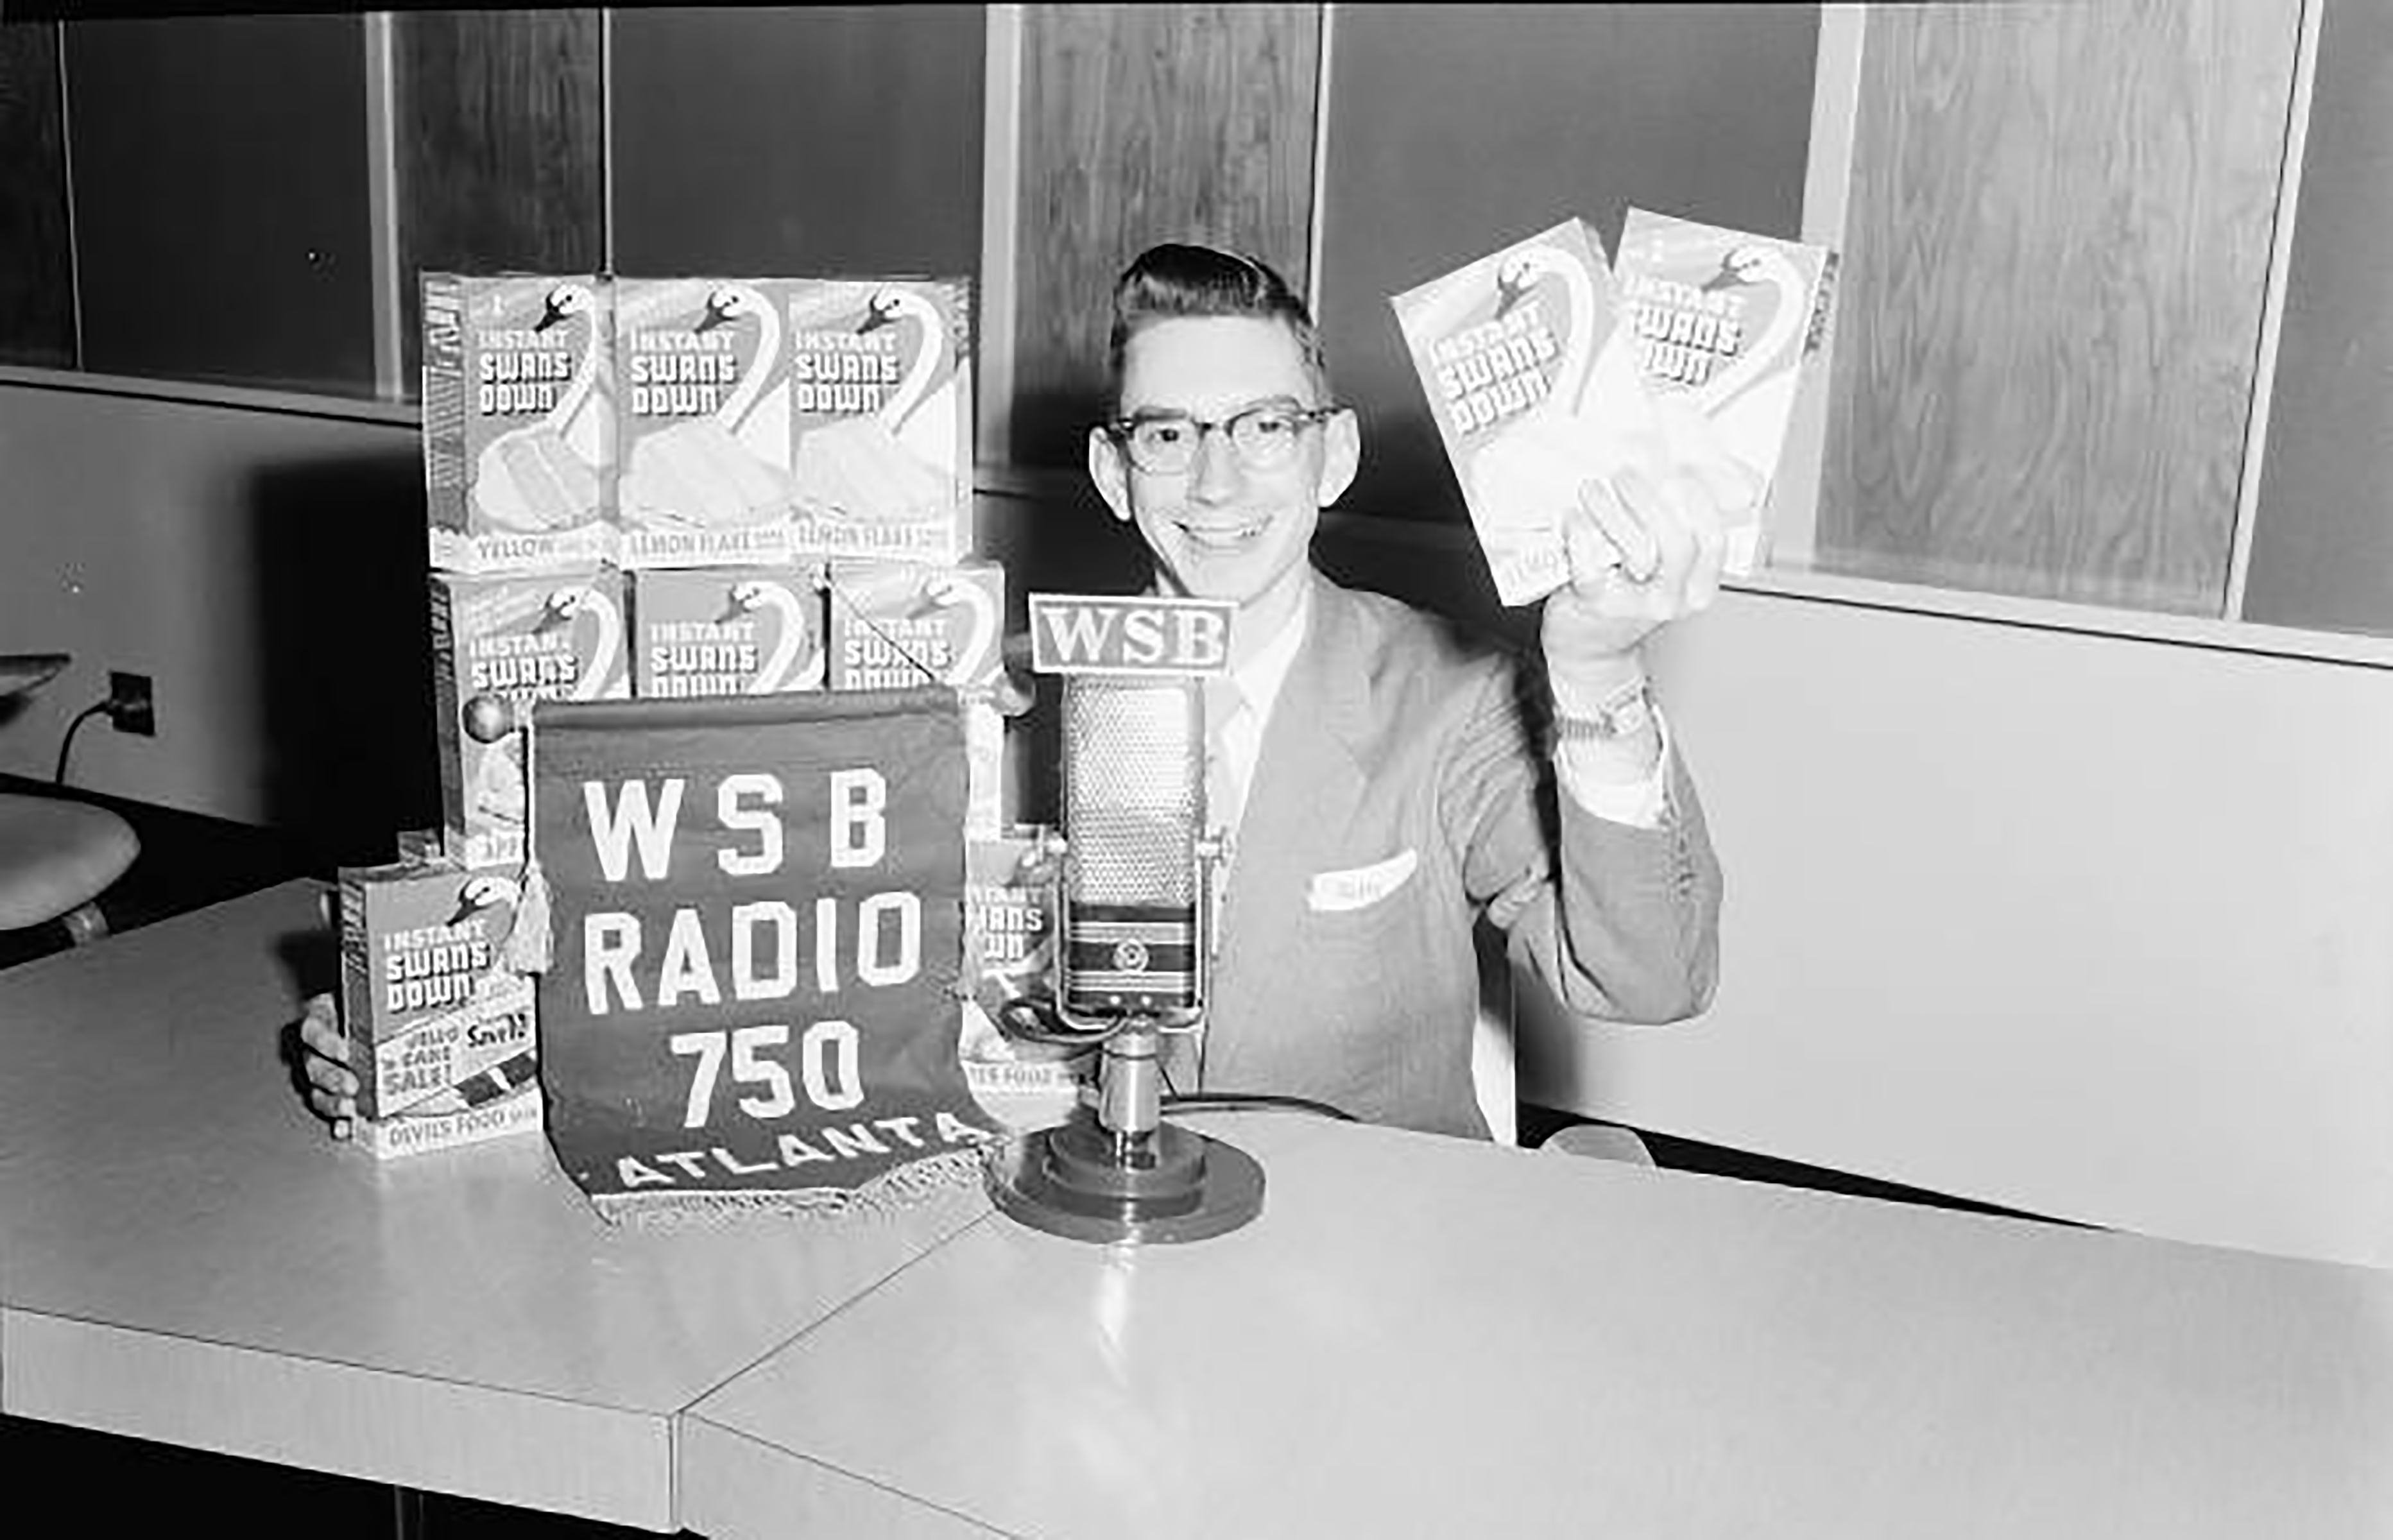 WSB radio in Atlanta celebrates 100 years on photo